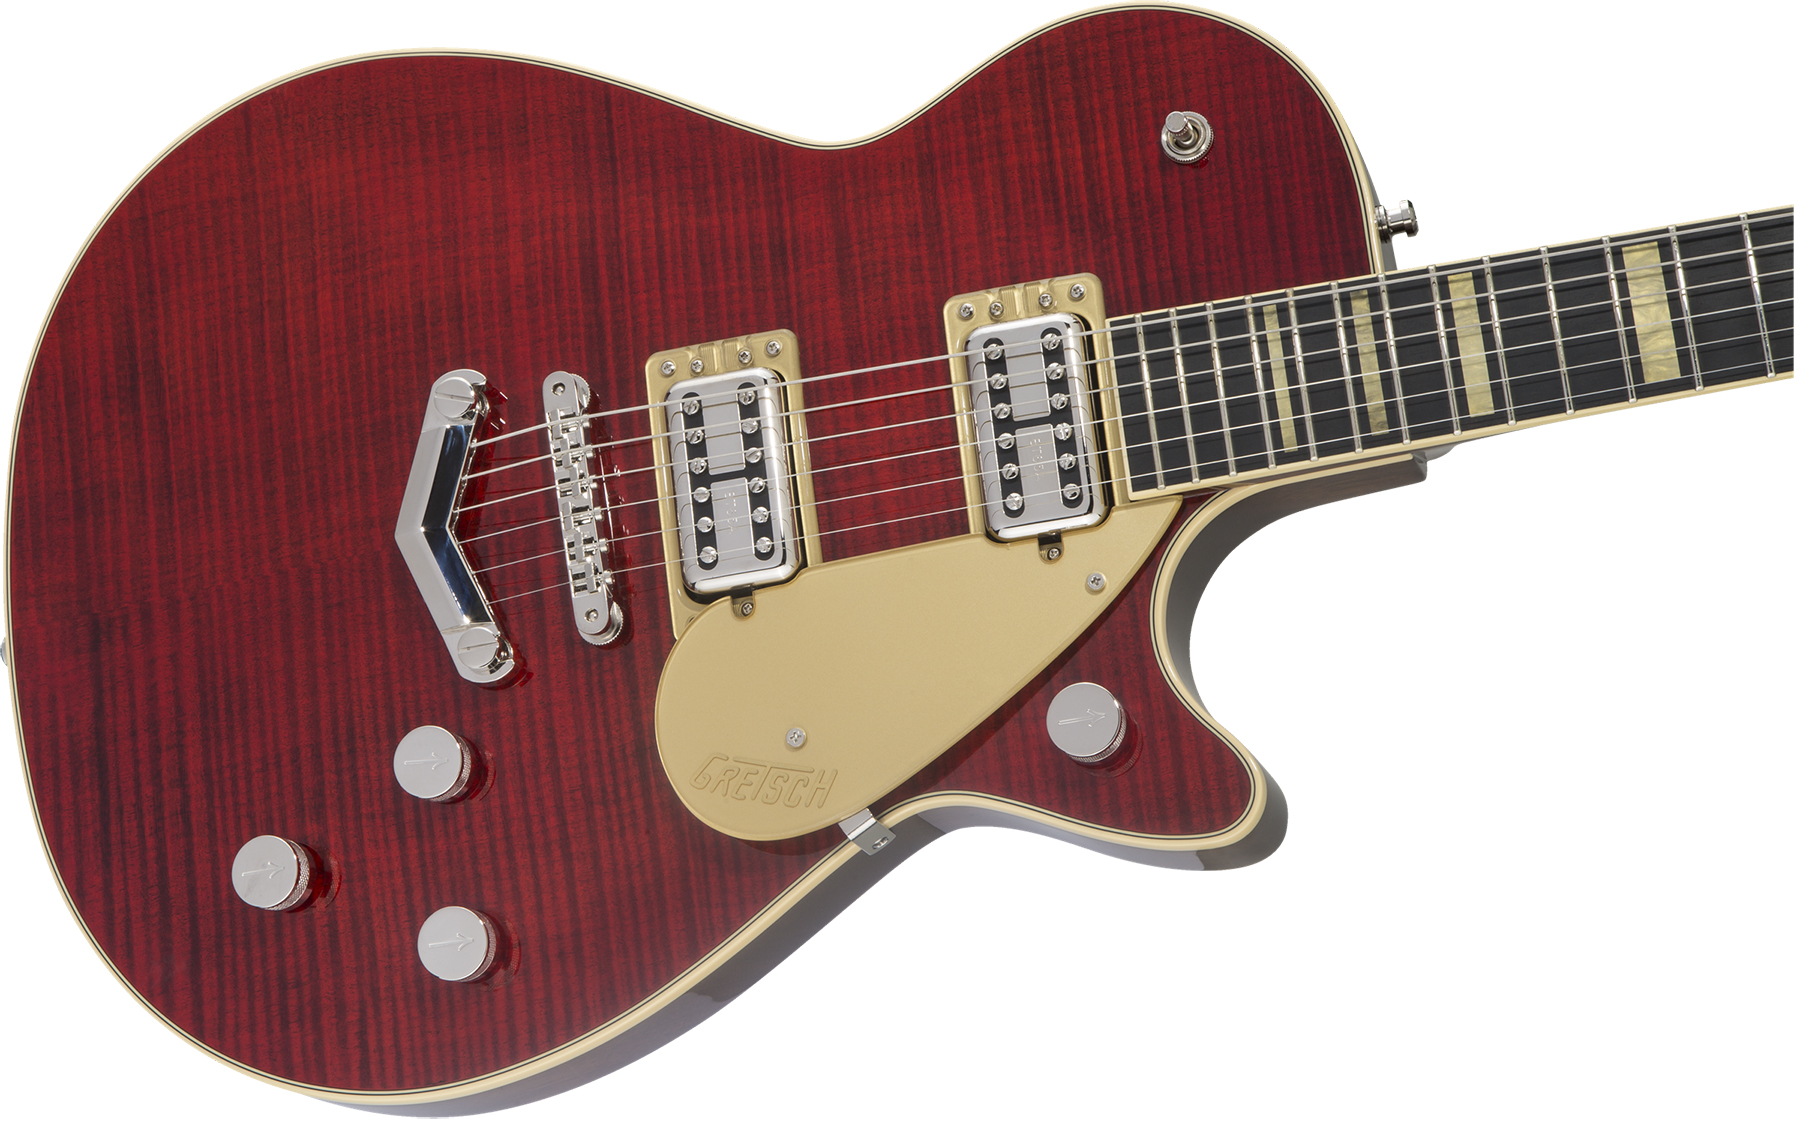 Gretsch G6228fm Players Edition Jet Bt Stoptail Professional Japon Ht Hh Eb - Crimson Stain - Semi-hollow electric guitar - Variation 2